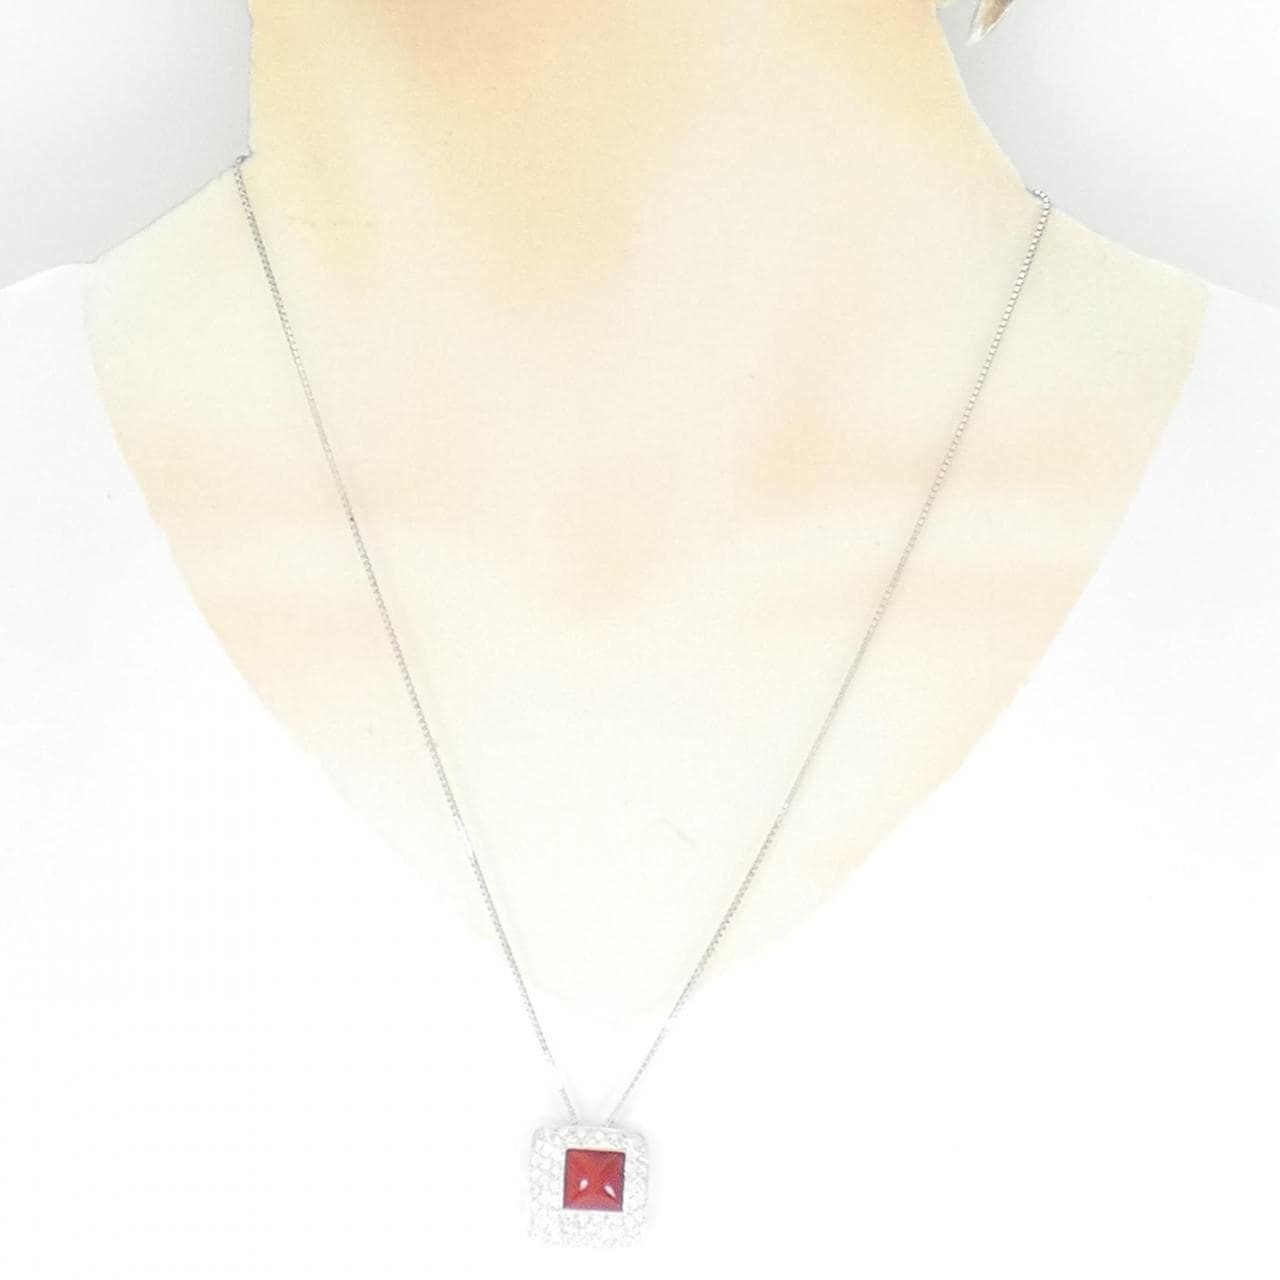 PT coral necklace